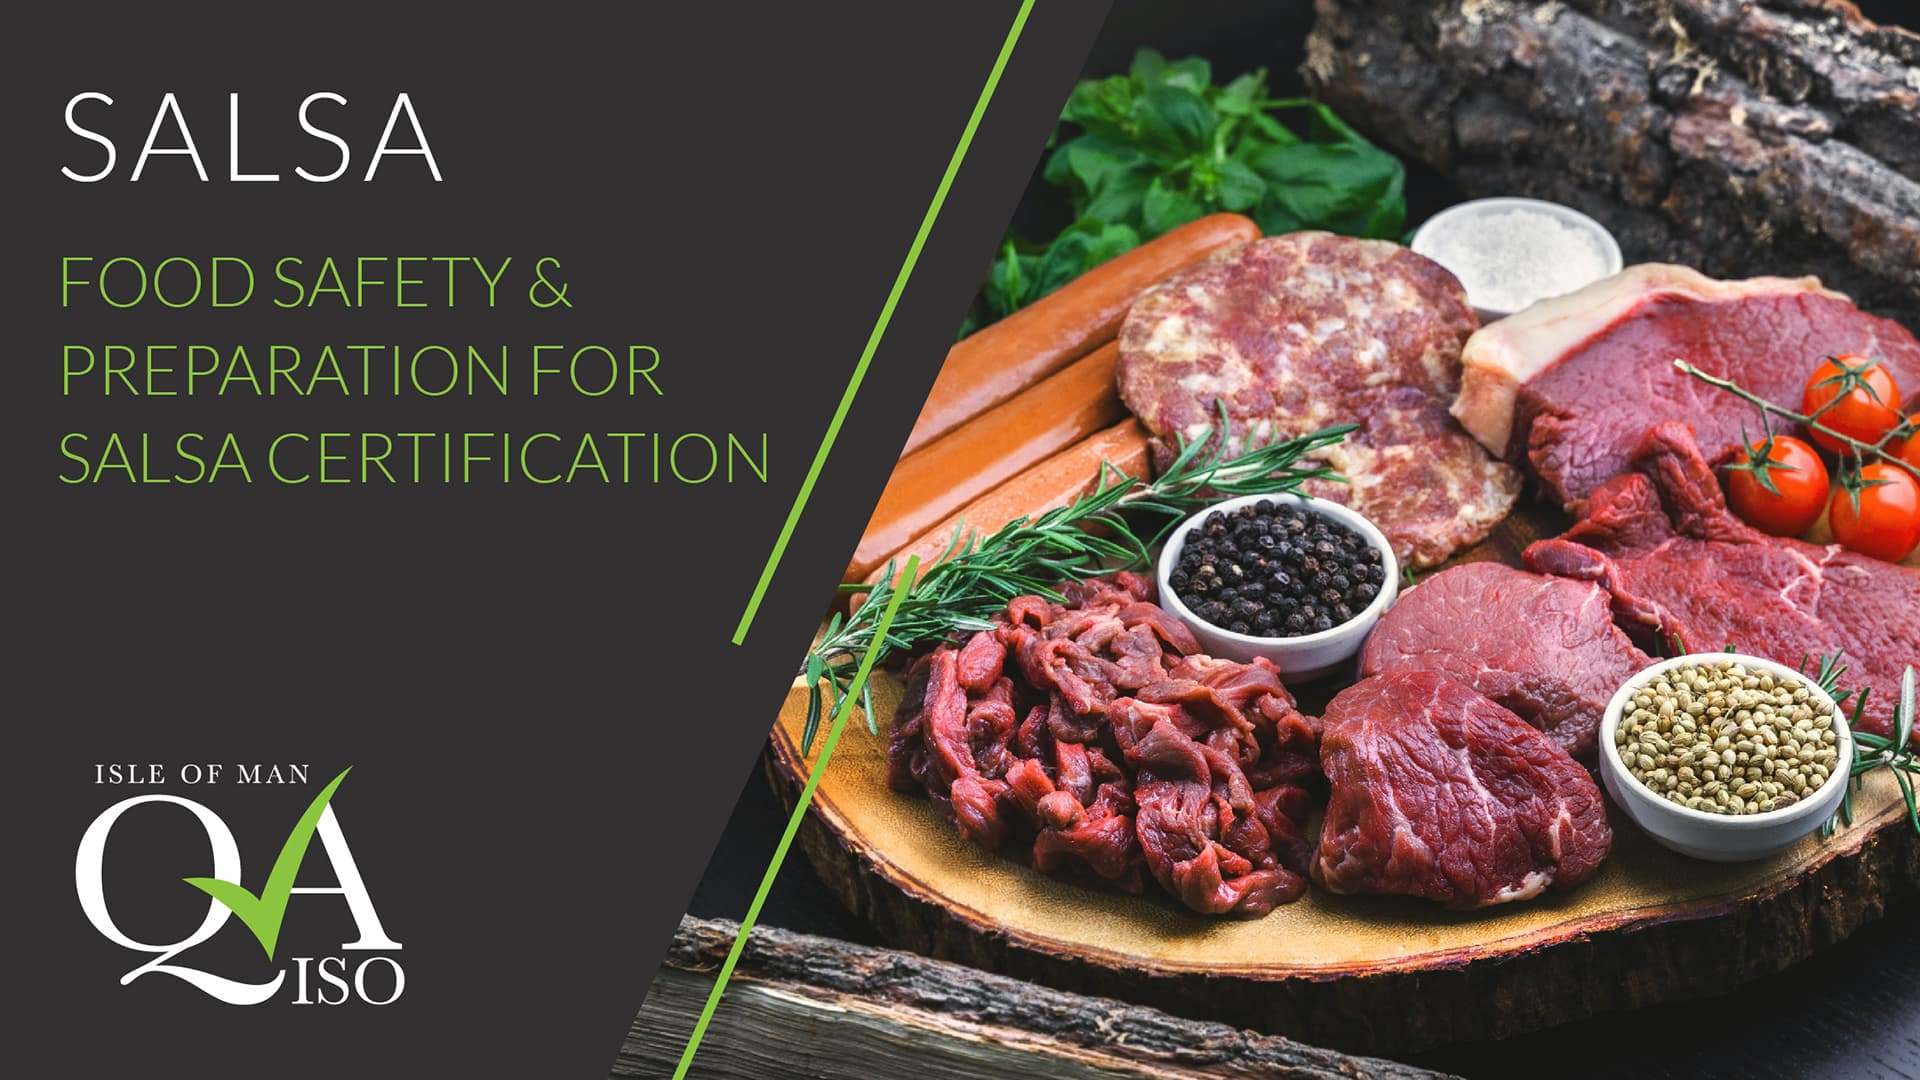 Food Safety & Preparation for SALSA certification